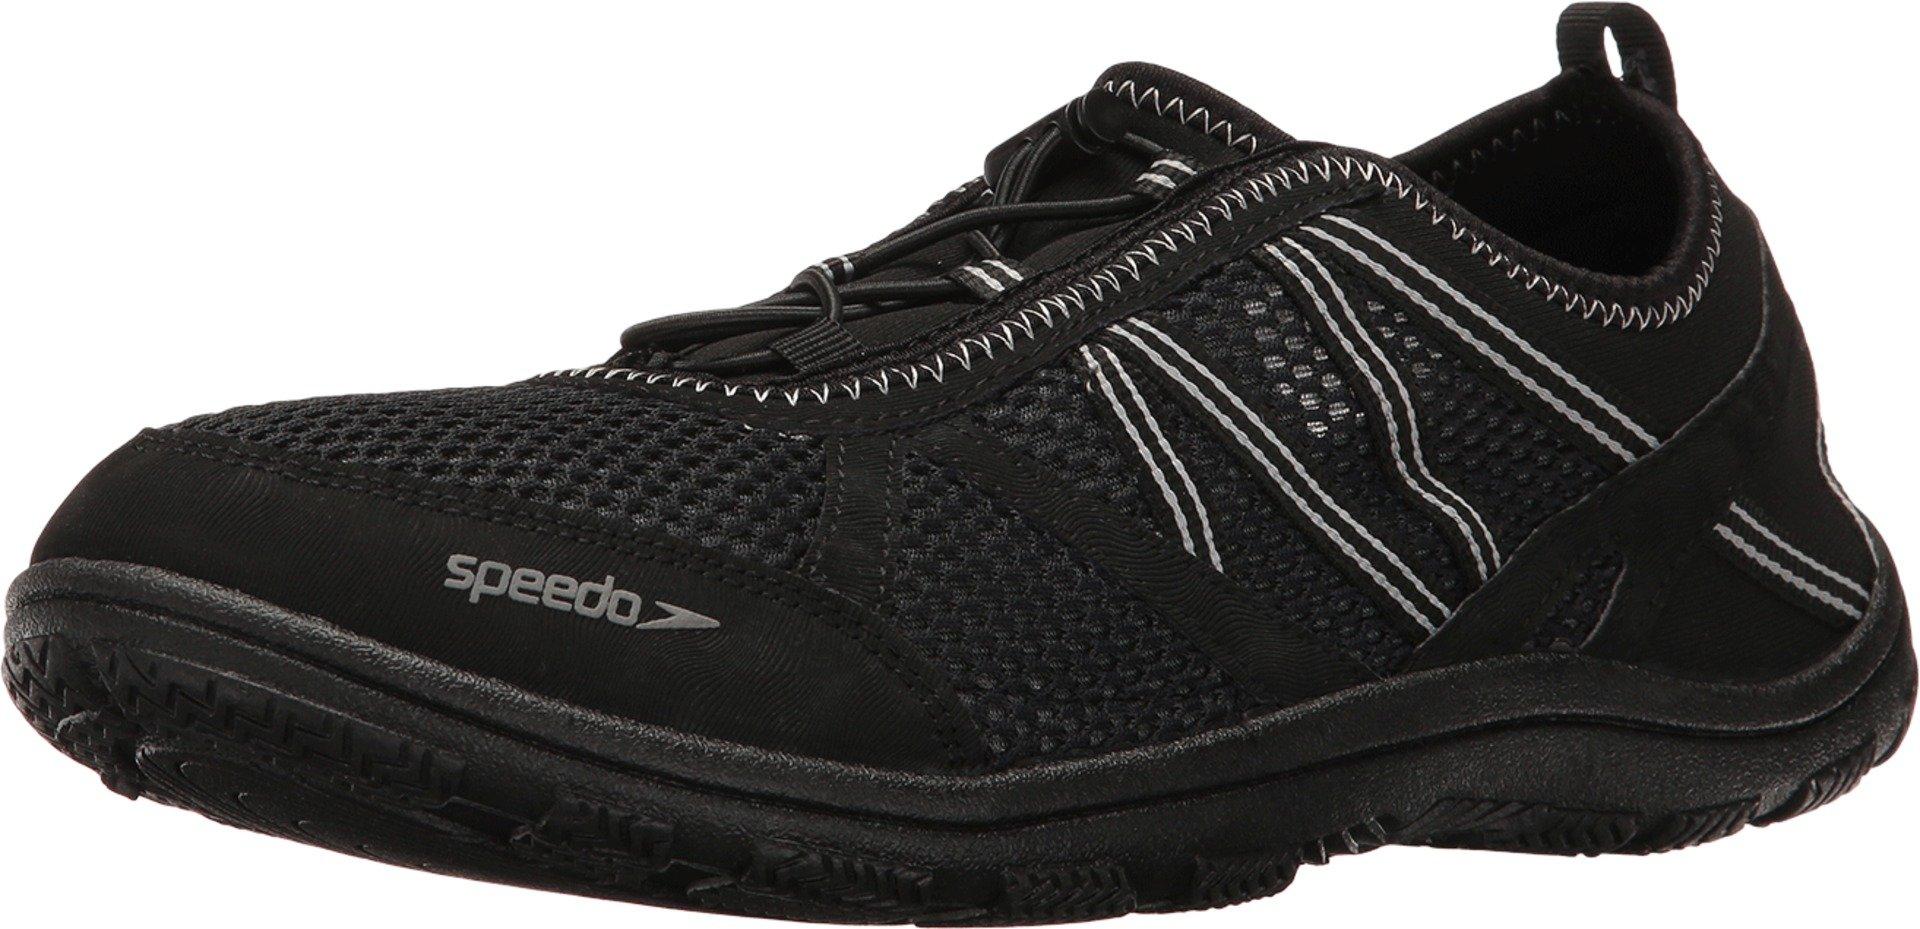 Details about   Speedo Mens Seaside Lace 5.0 Black Mesh Water Shoes 11 Medium D BHFO 6308 